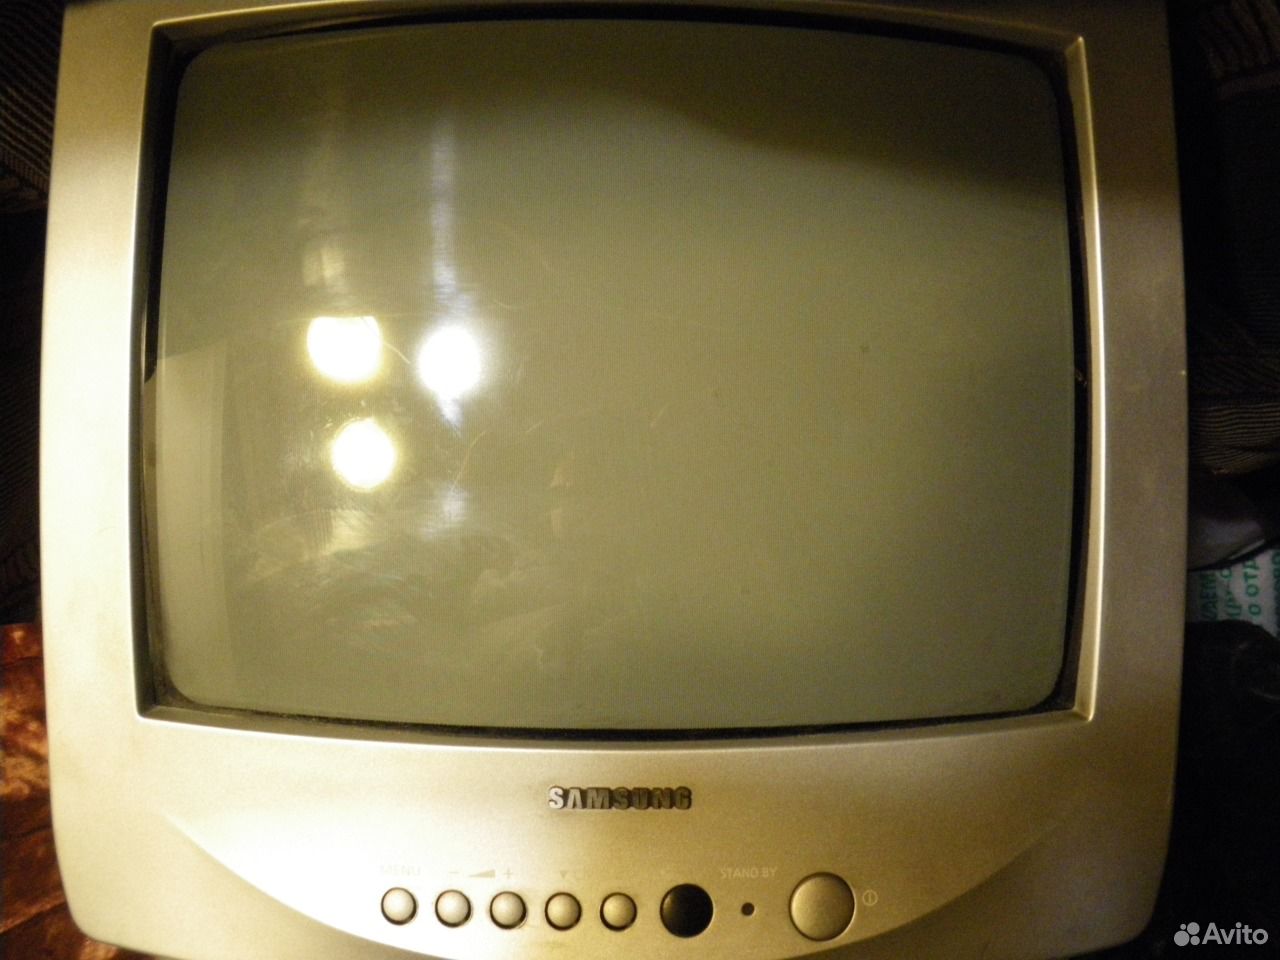 Цена телевизора екатеринбург. Маленький телевизор. Телевизор Samsung маленький. Телевизор самсунг маленький старый. Старый телевизор самсунг 2000.